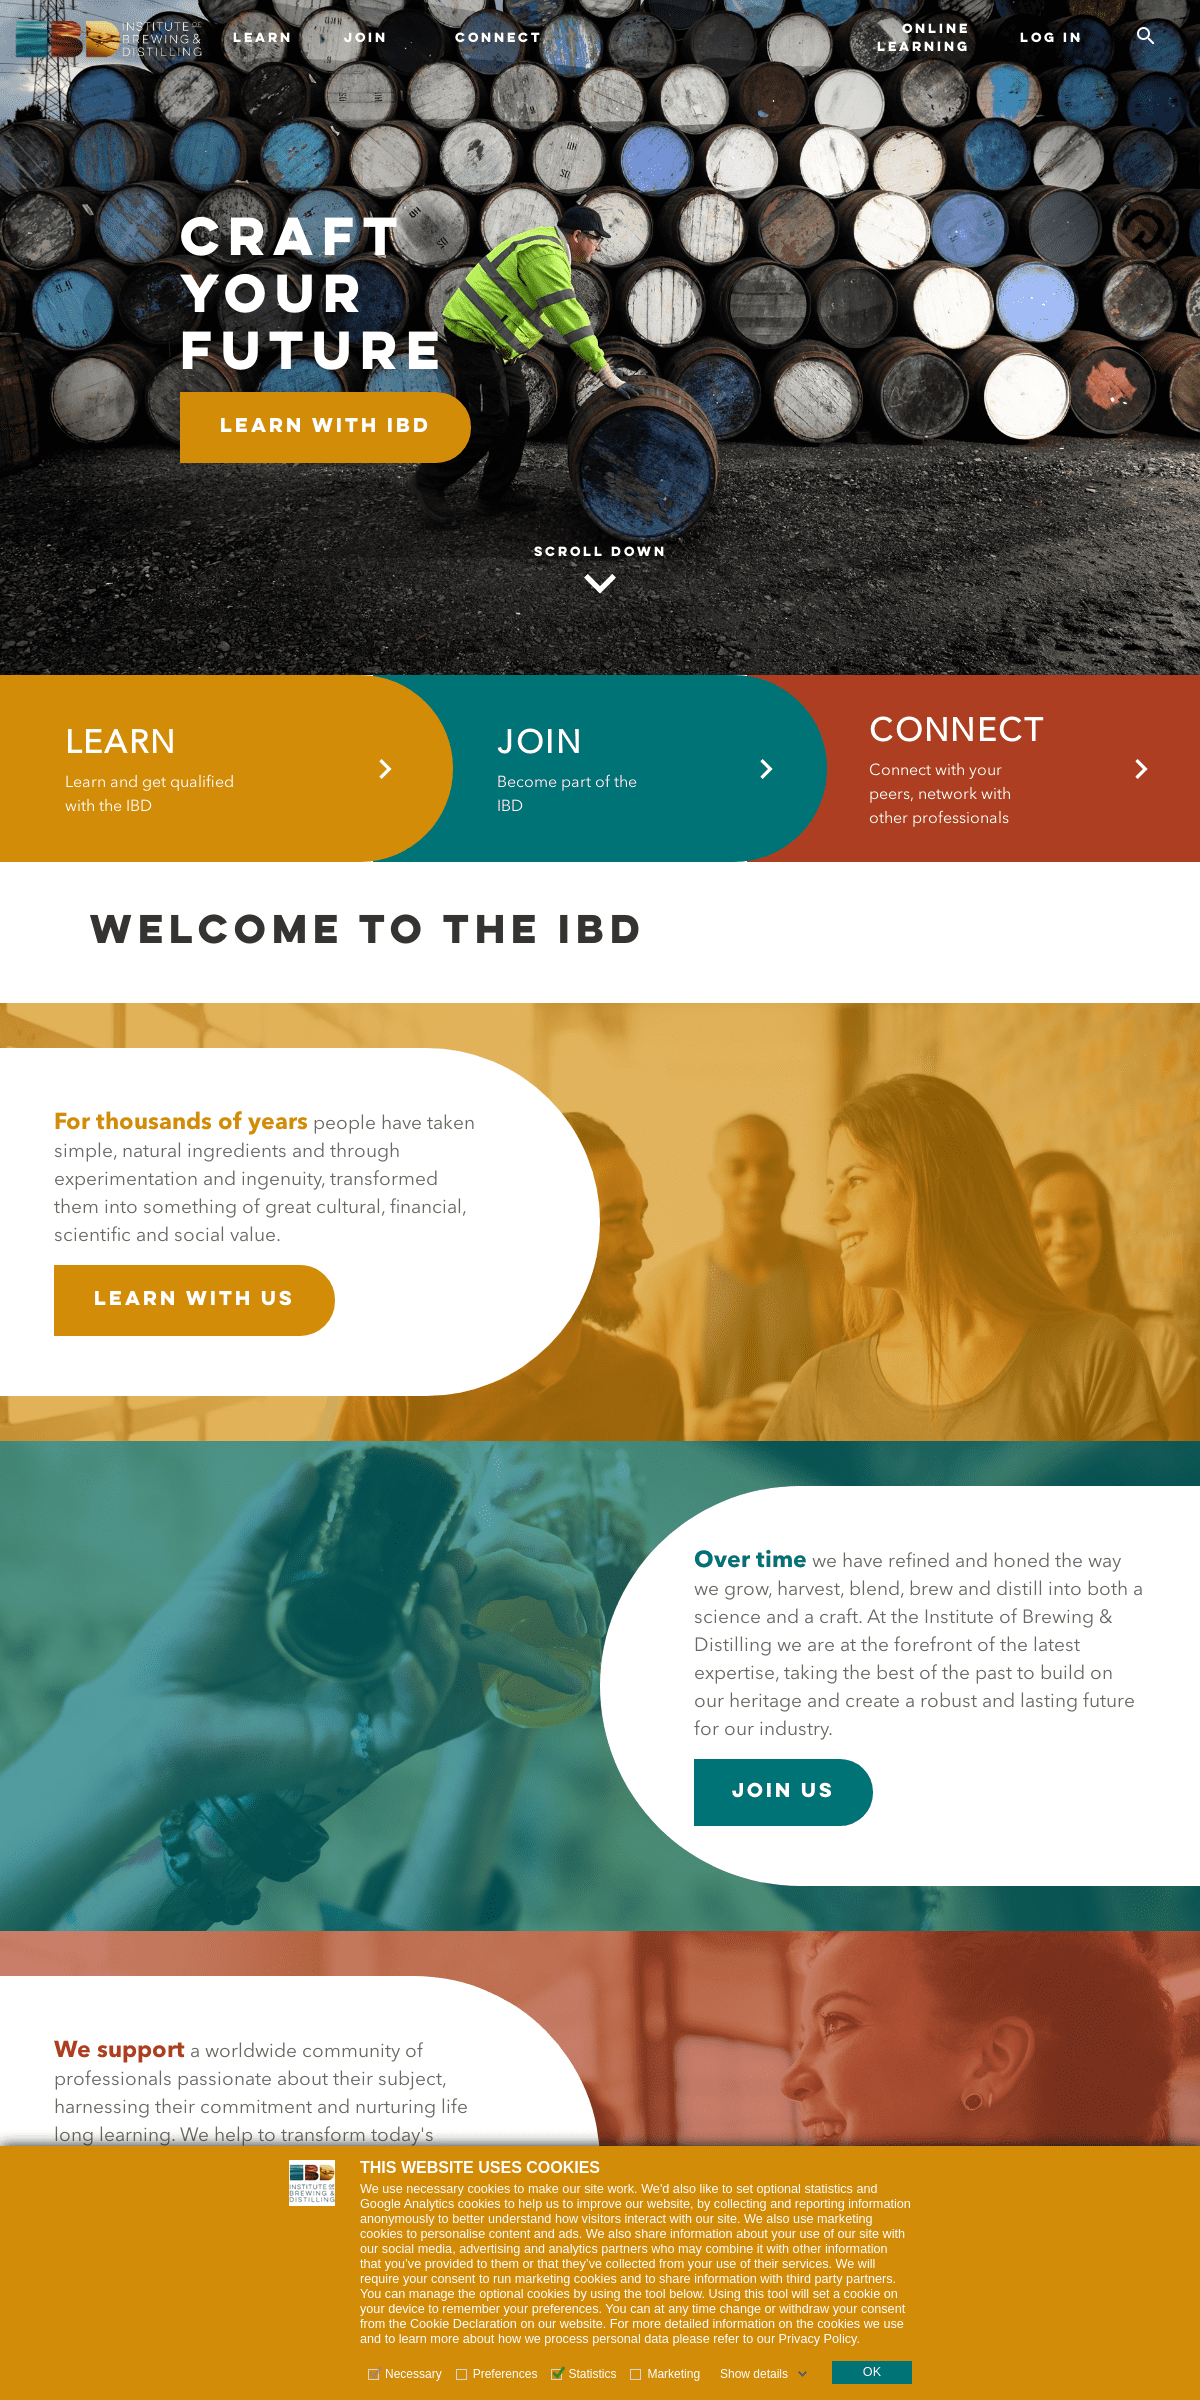 A complete backup of ibd.org.uk